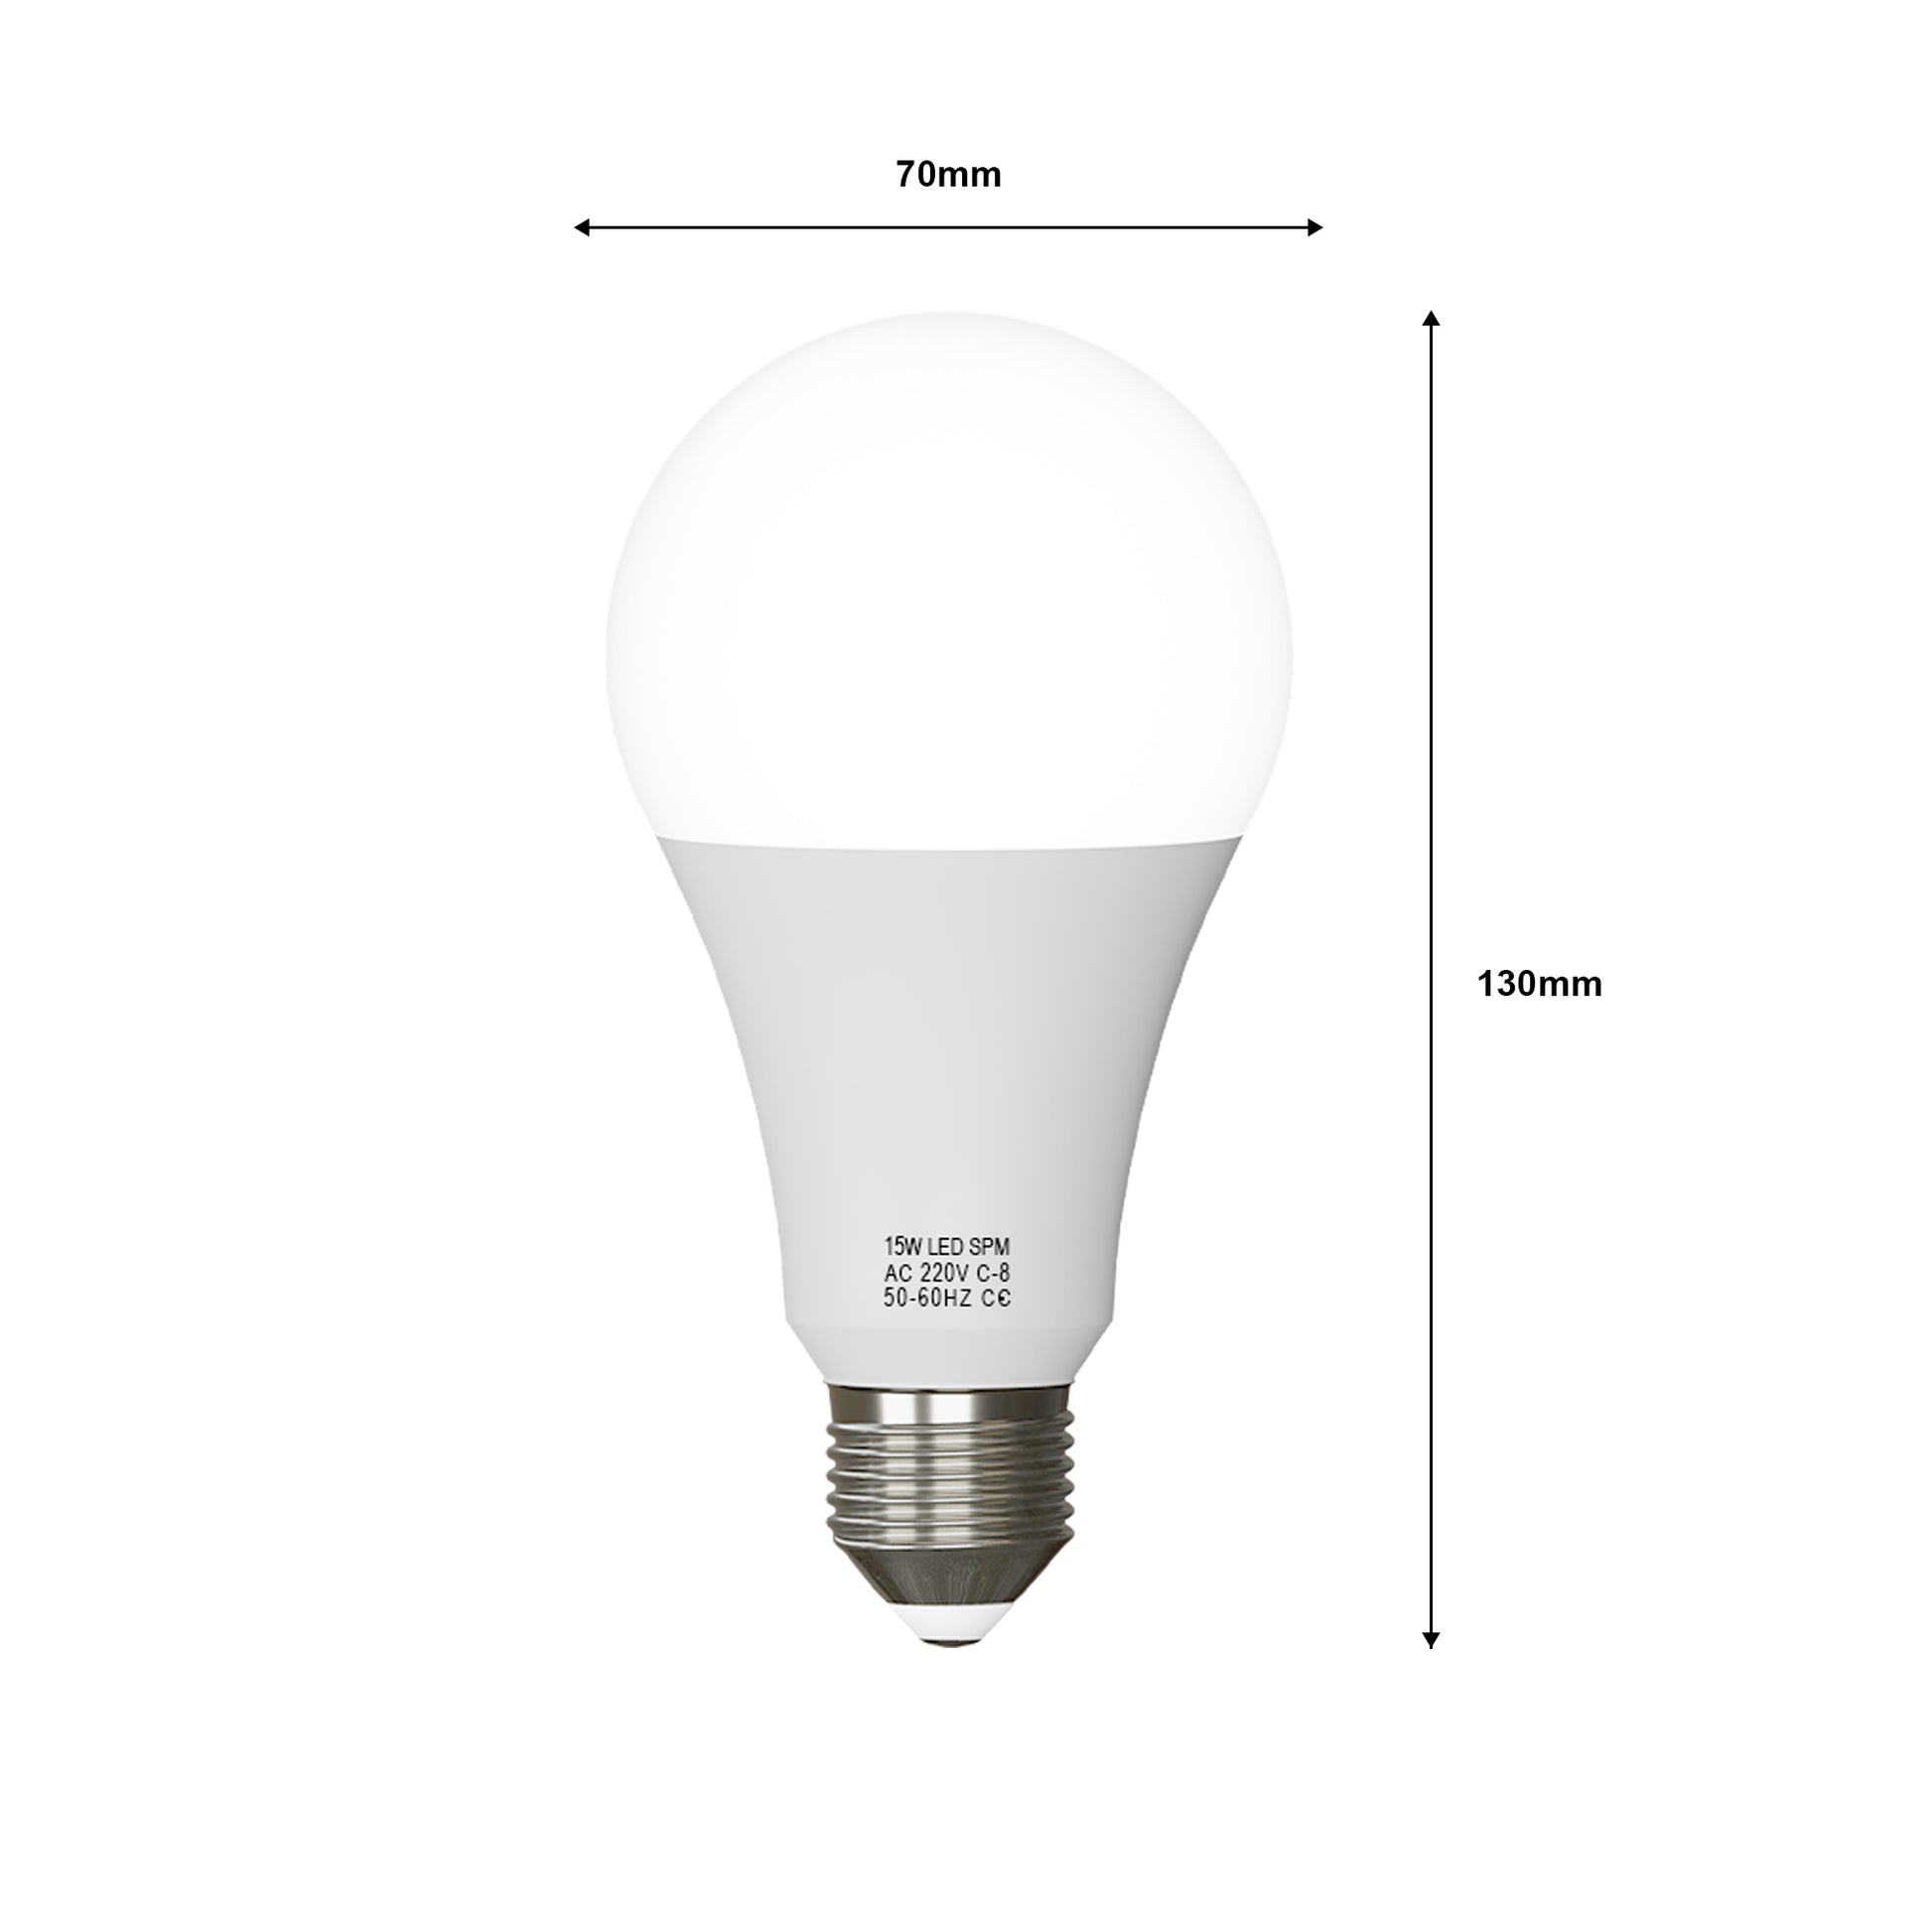 Energy efficient LED Light bulb